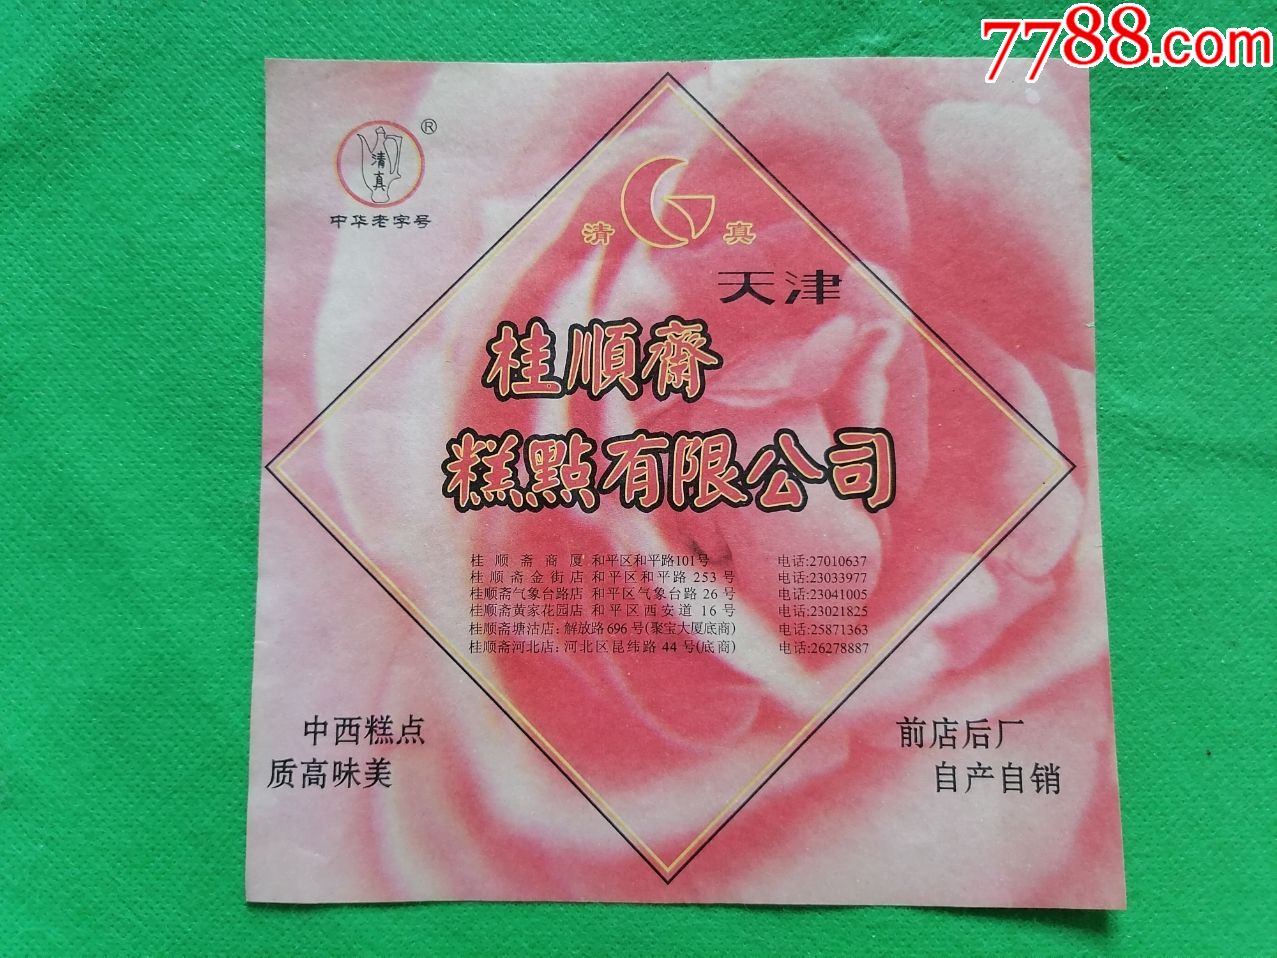 【MOONLIGHT RECORD】桂顺斋月饼包装 - 找好包装，上包联网